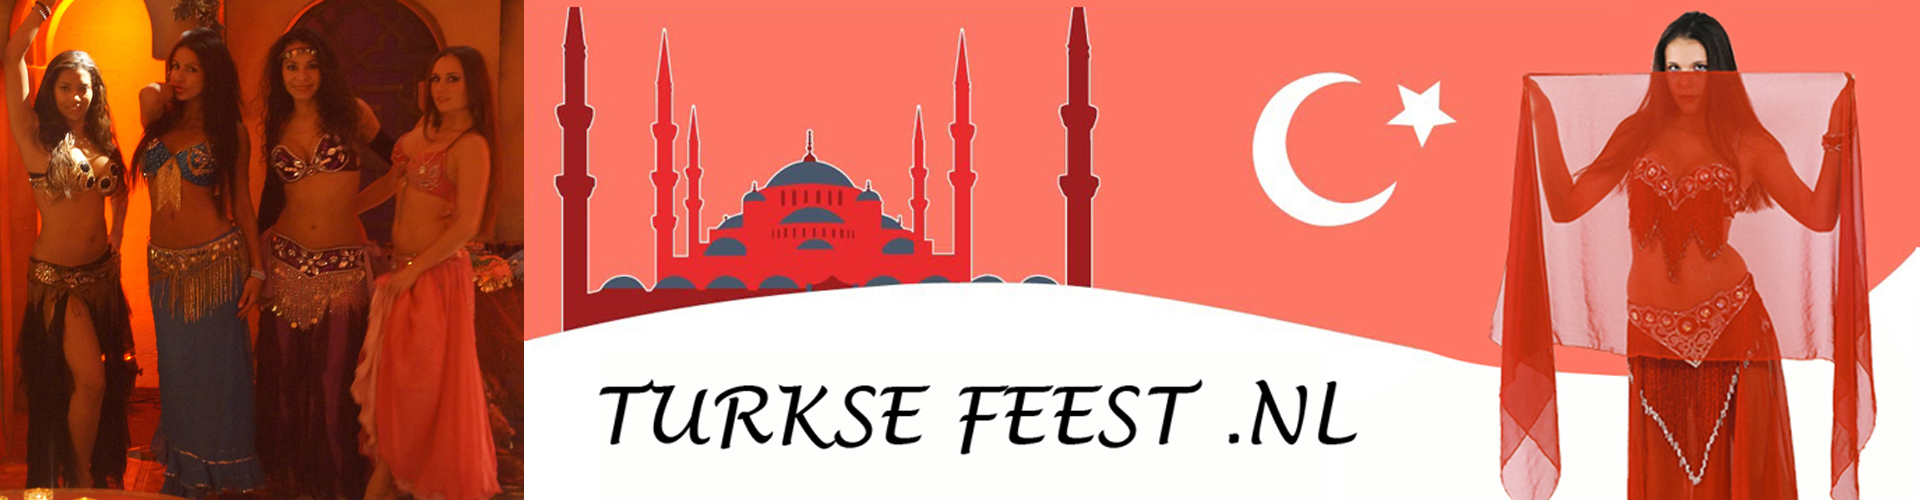 Turks thema feest